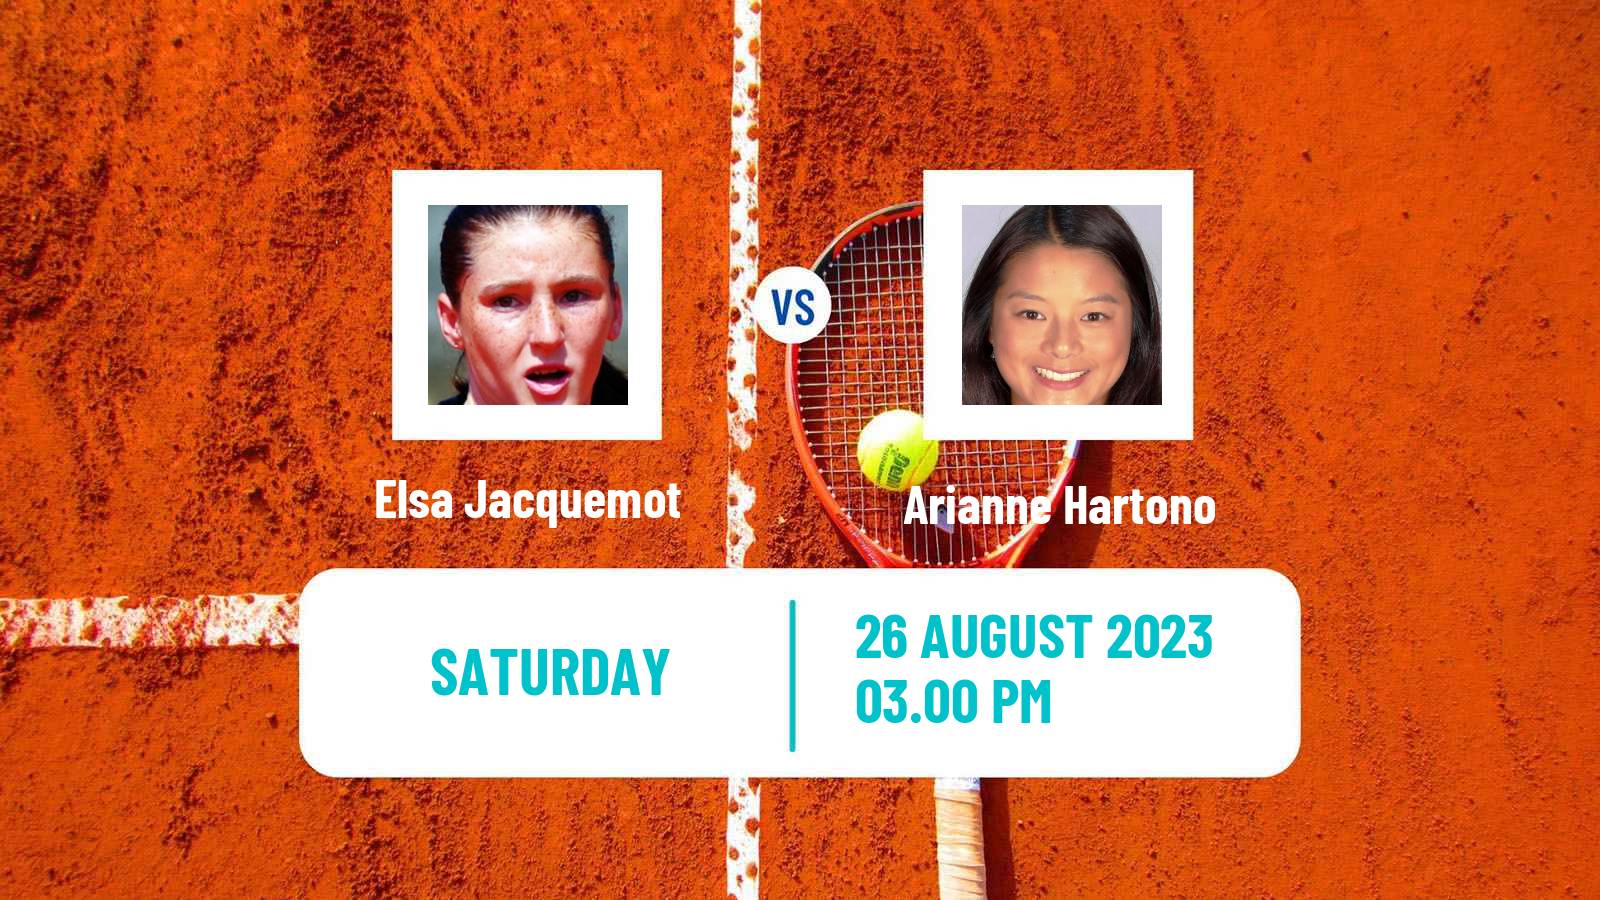 Tennis WTA US Open Elsa Jacquemot - Arianne Hartono